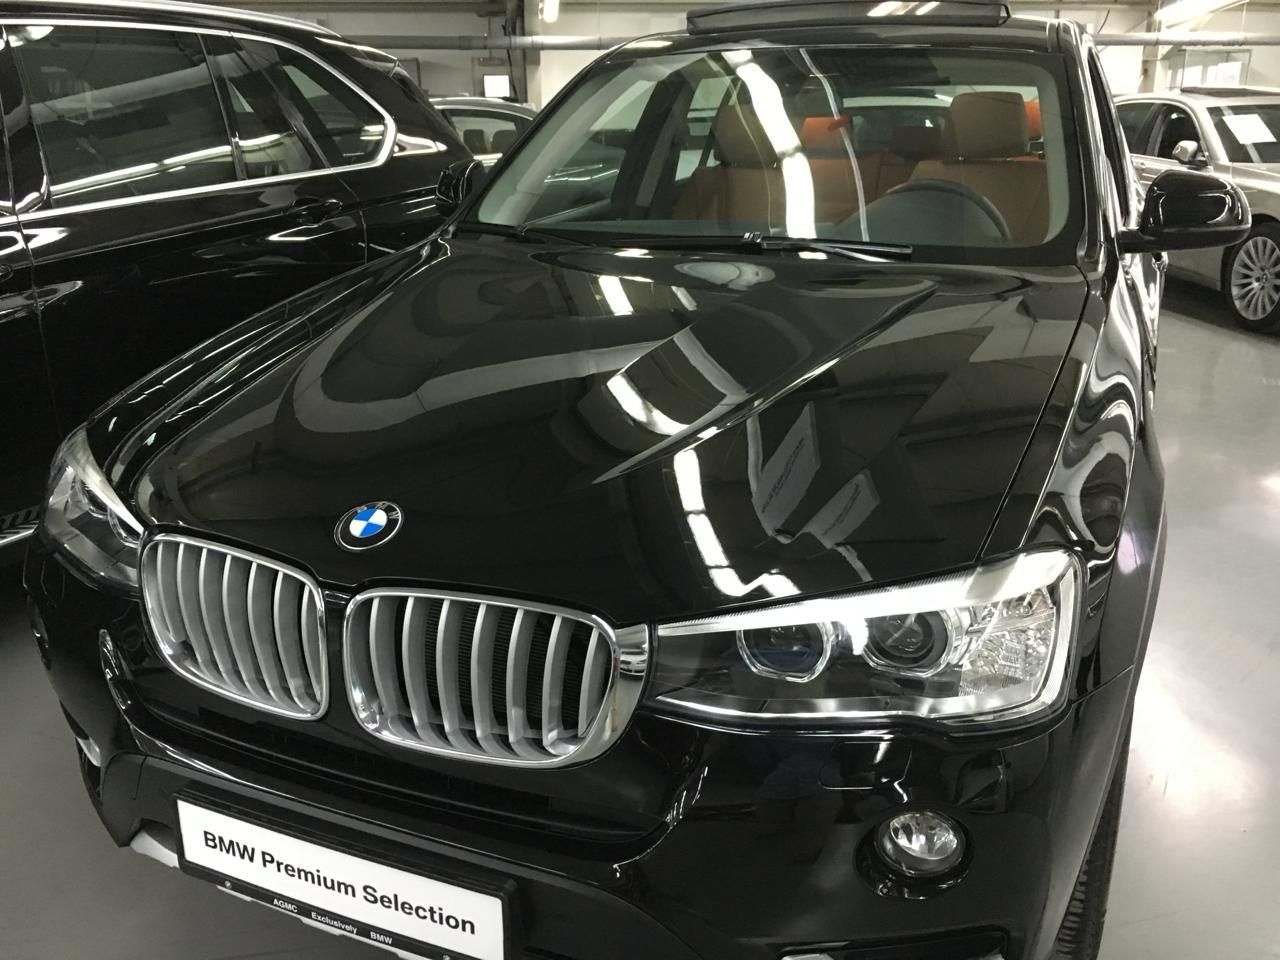 2016 BMW X3 in dubai